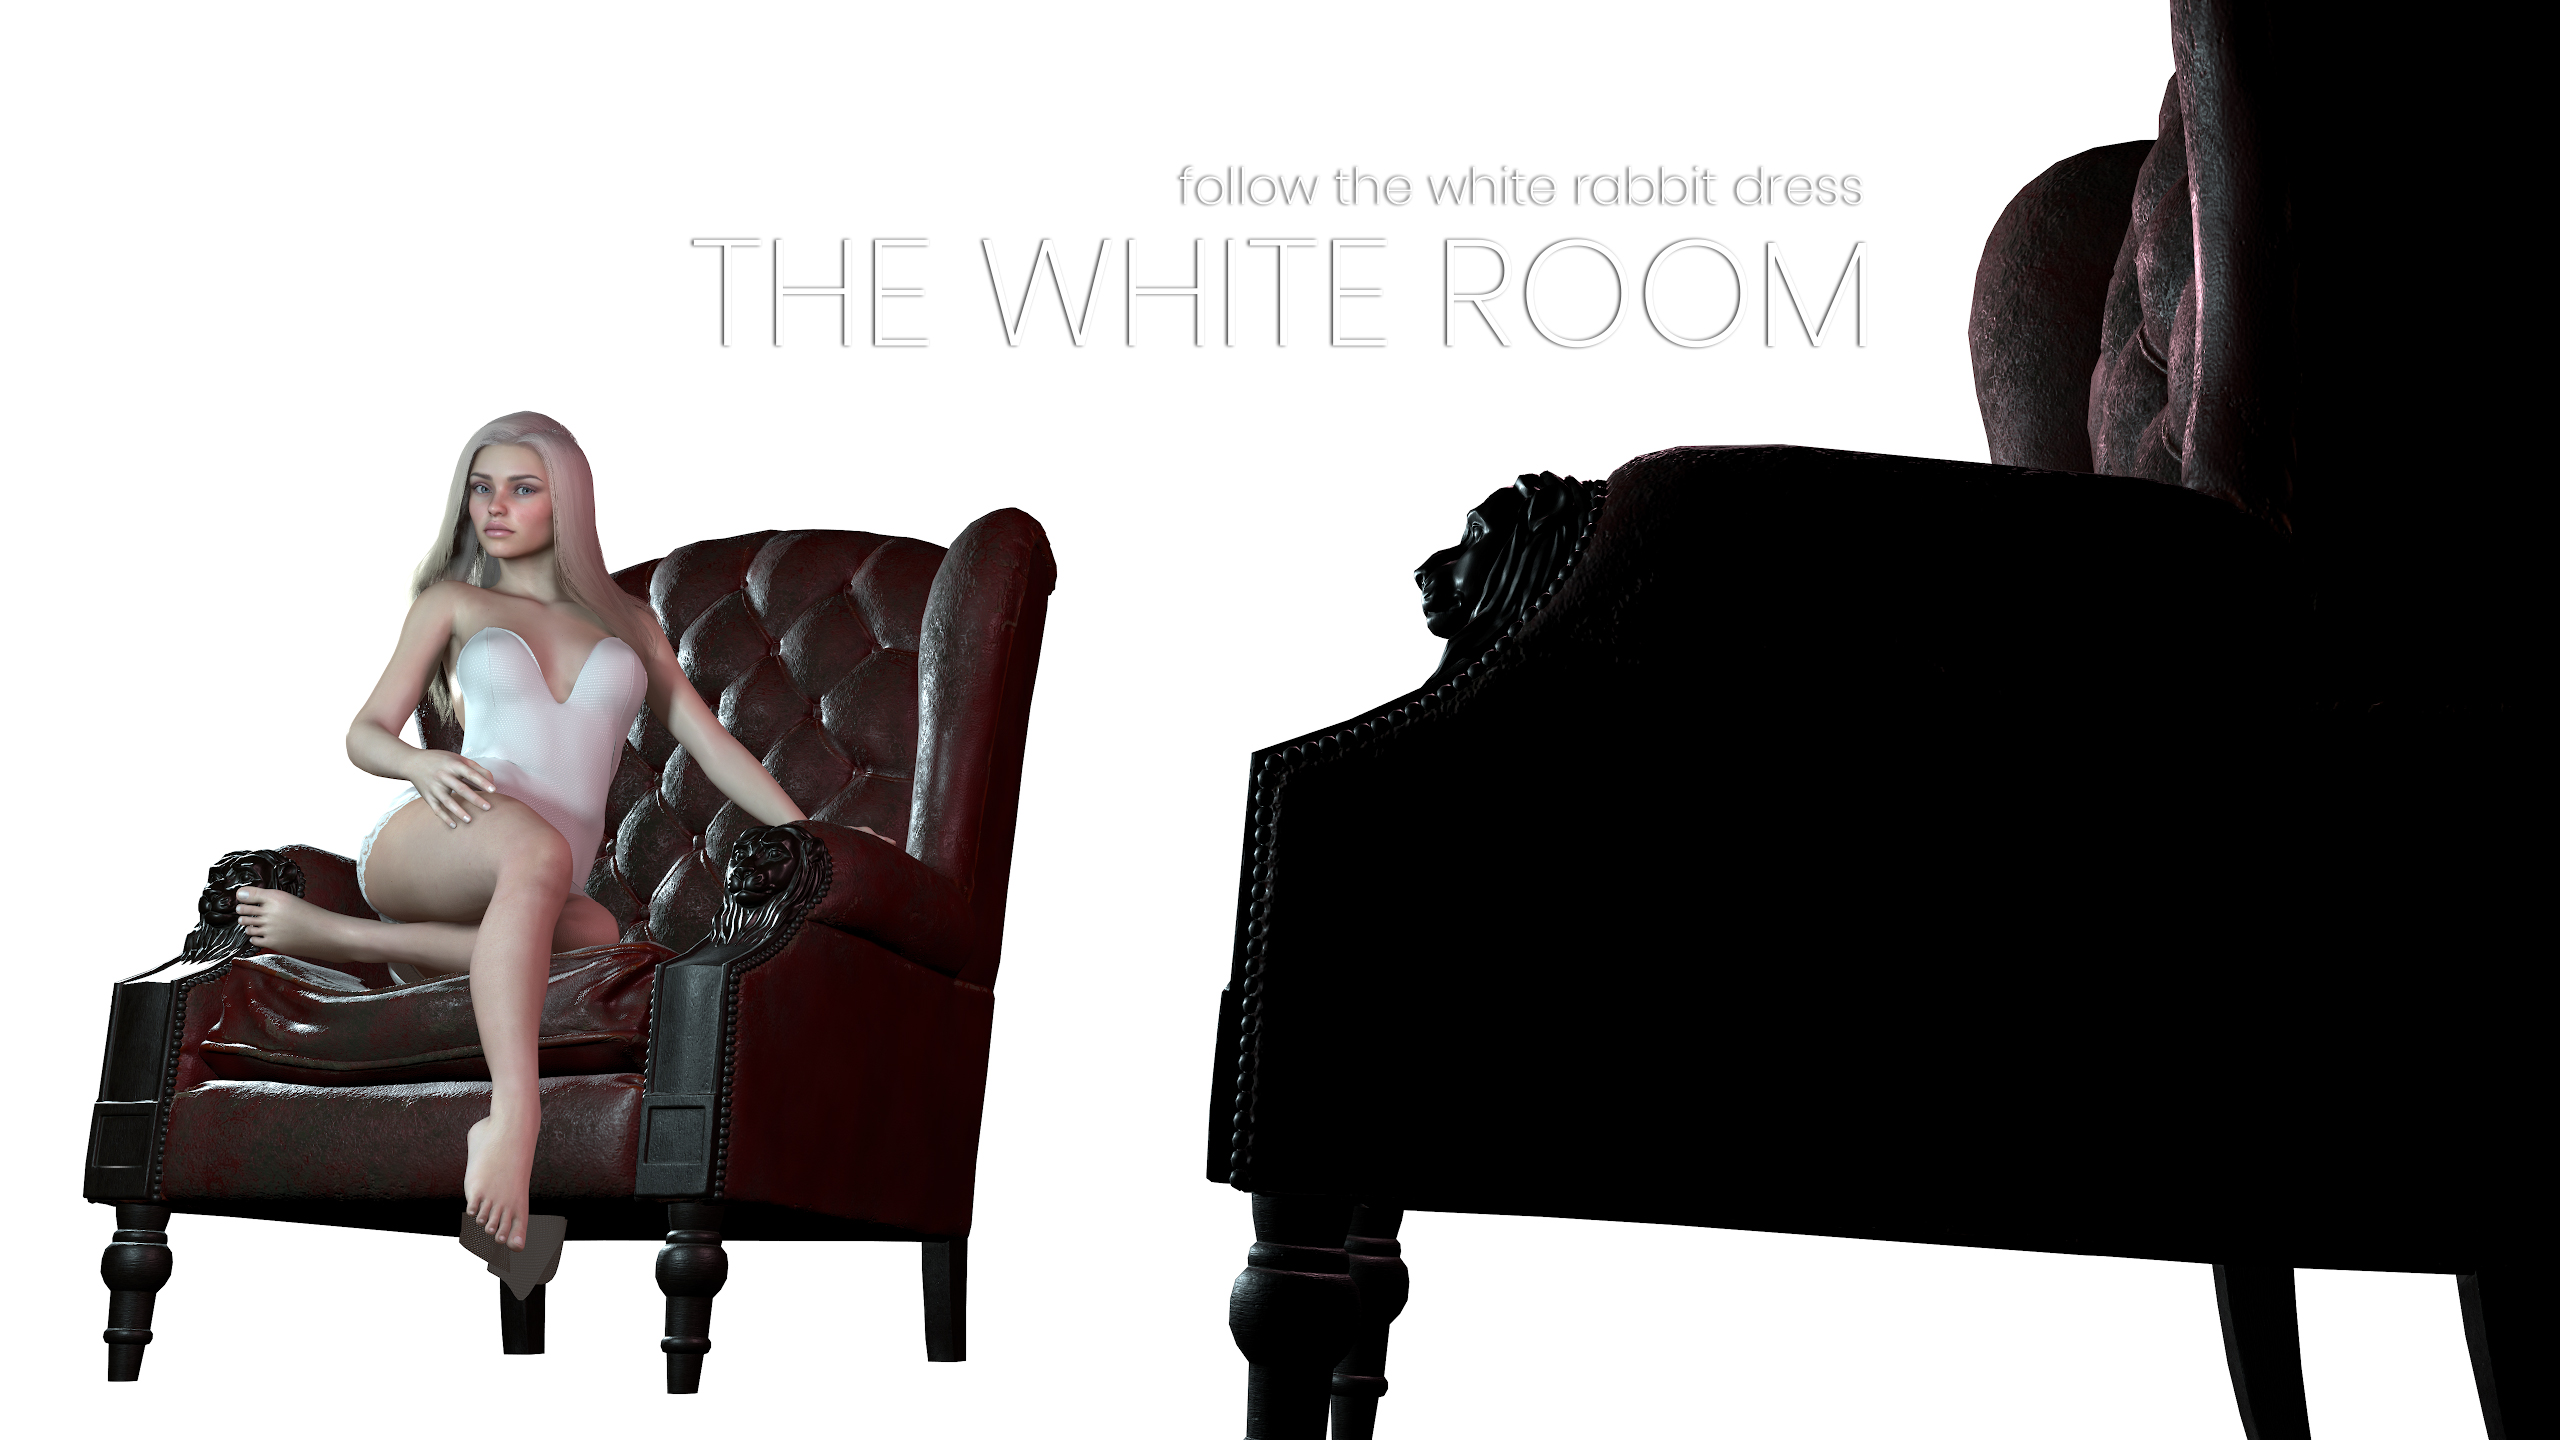 whiteroom-title.jpg